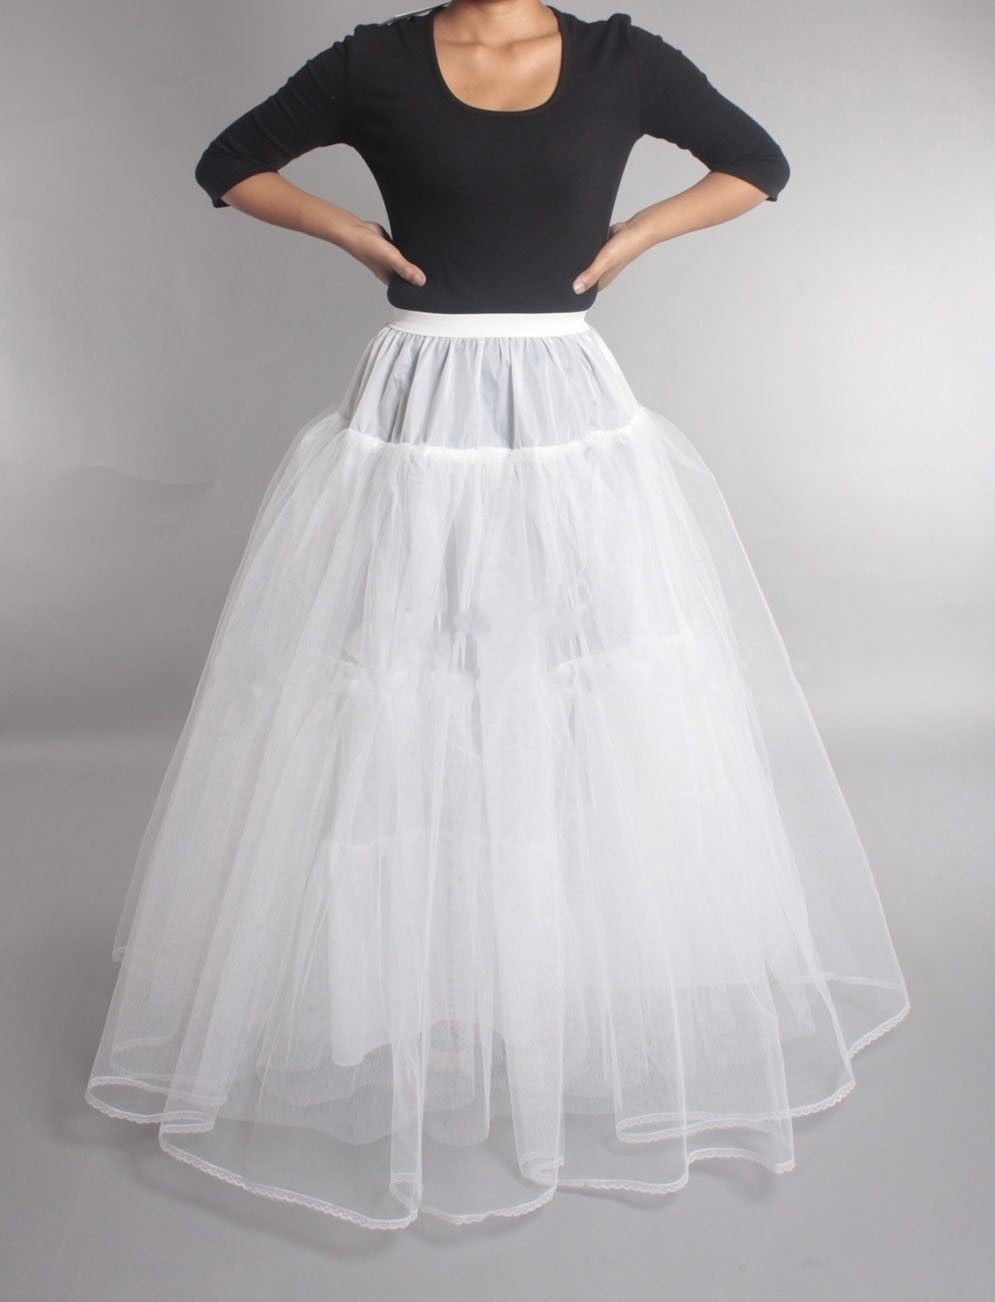 In Store Underskirt Bridal Dress Hoop Slips Wedding Petticoat Crinoline Slip PromE